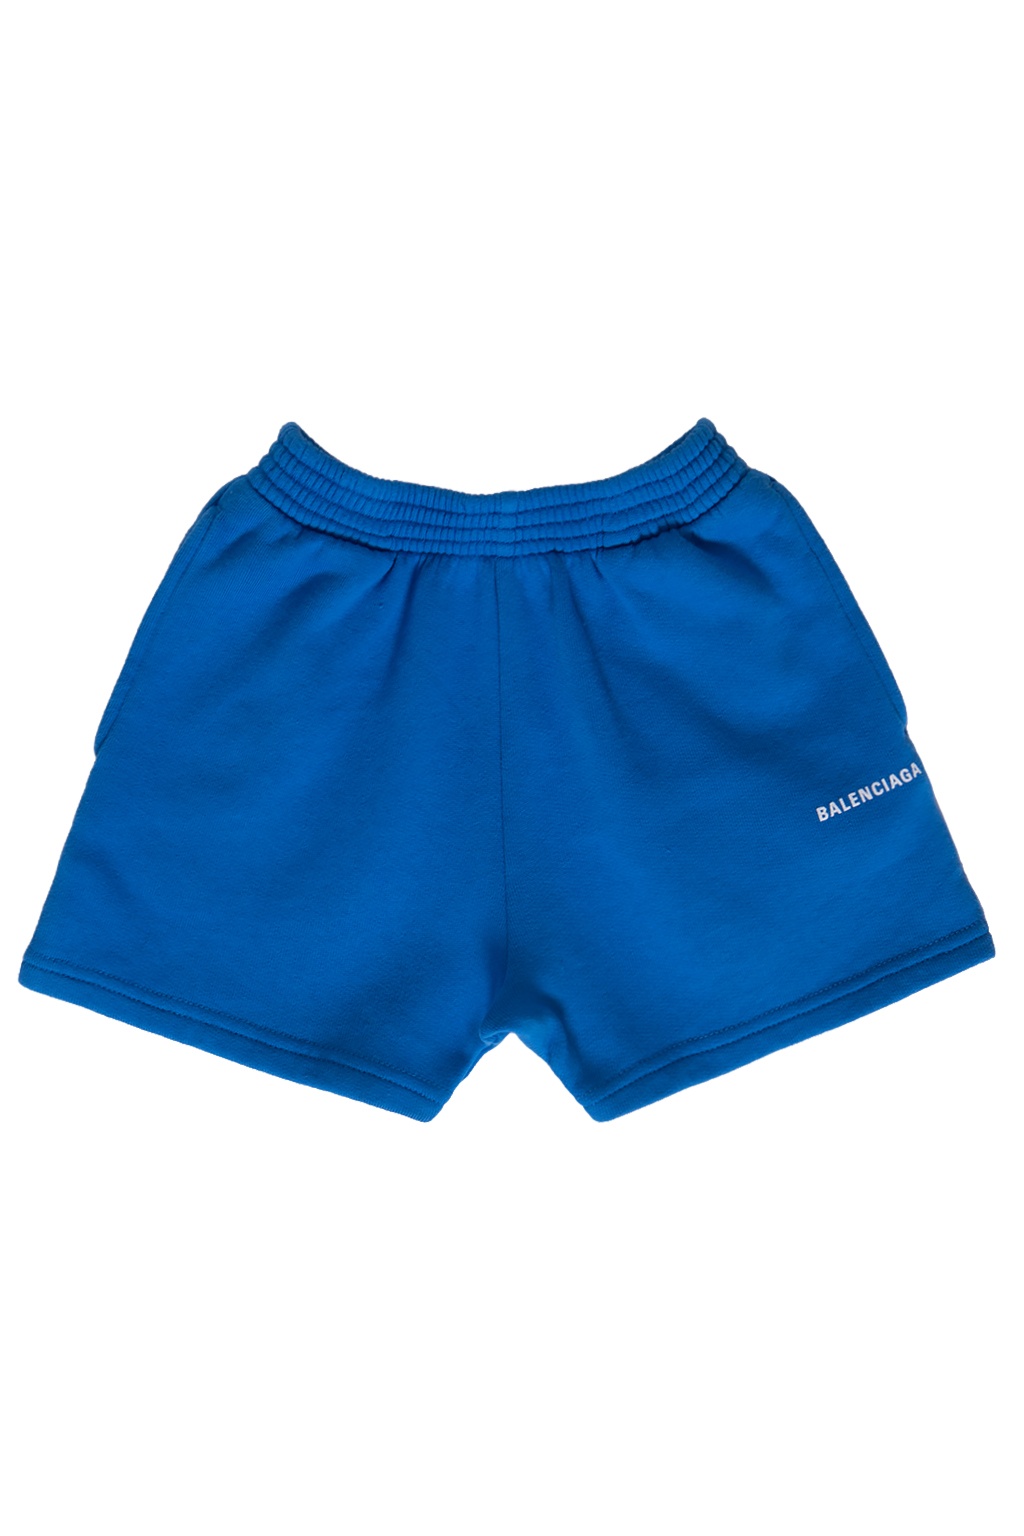 Balenciaga Kids lacoste piping nylon tennis shorts